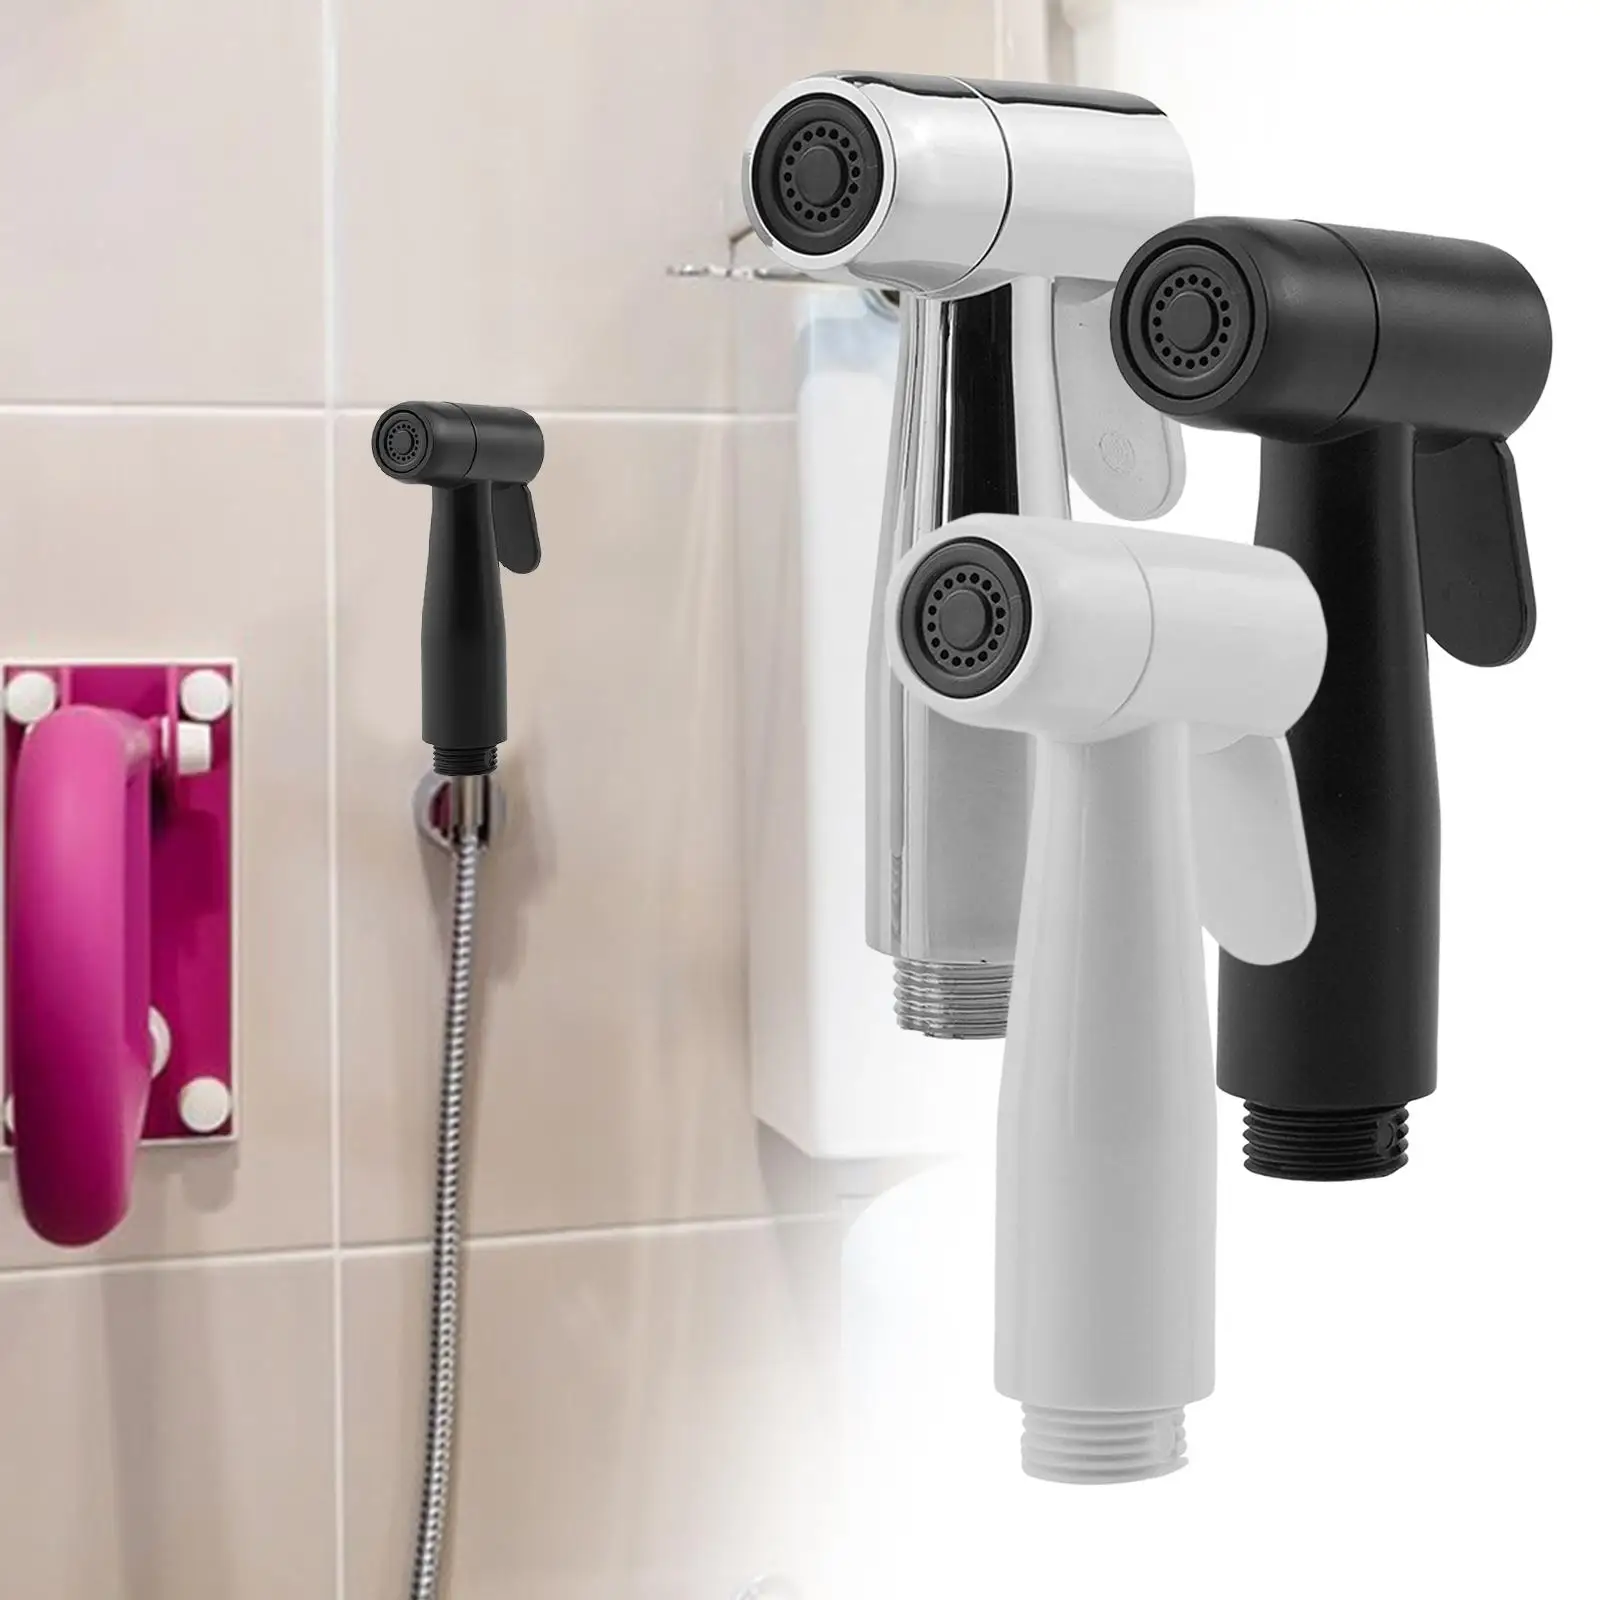 Bidet Toilet Sprayer Head Portable Pet Shower Toilet Water Sprayer for Toilet Flushing Personal Hygiene Gardening Car Washing